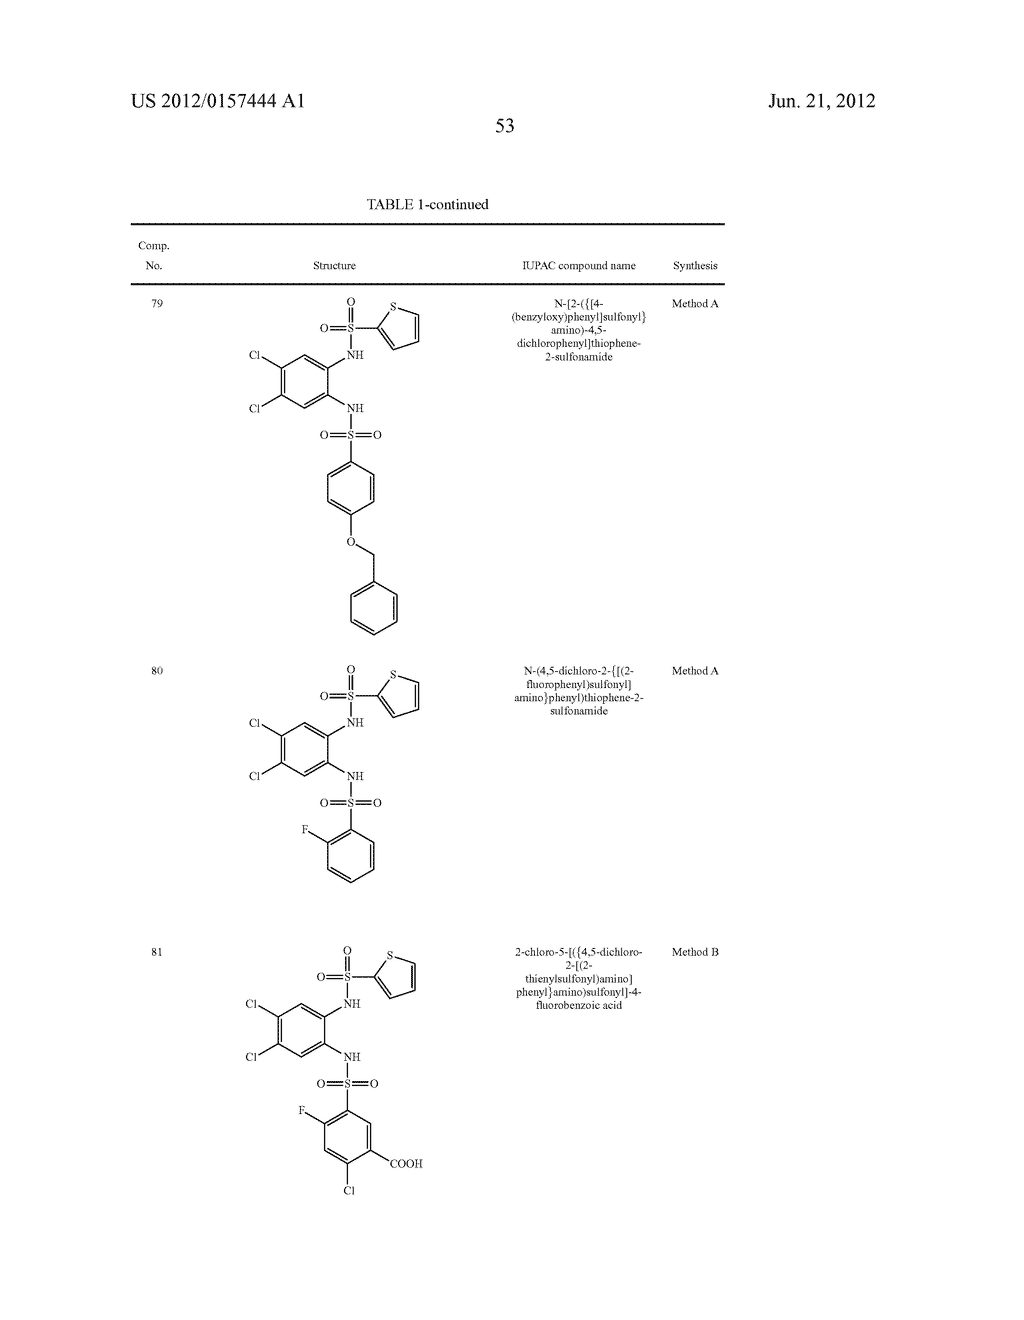 NOVEL 1,2- BIS-SULFONAMIDE DERIVATIVES AS CHEMOKINE RECEPTOR MODULATORS - diagram, schematic, and image 54